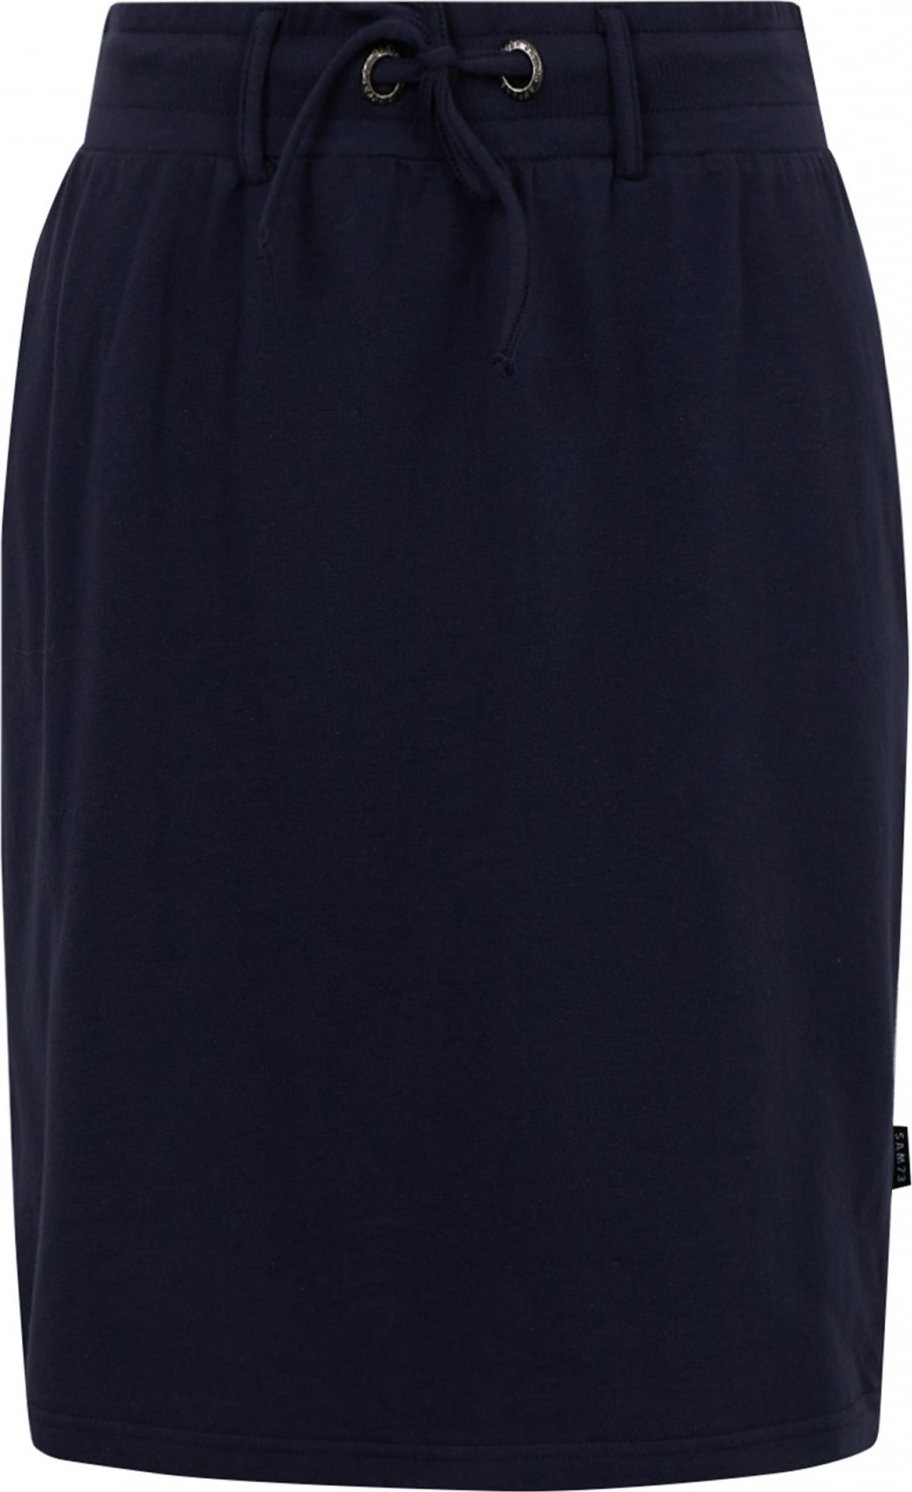 Dámská sukně SAM 73 Georgia modrá Velikost: XL